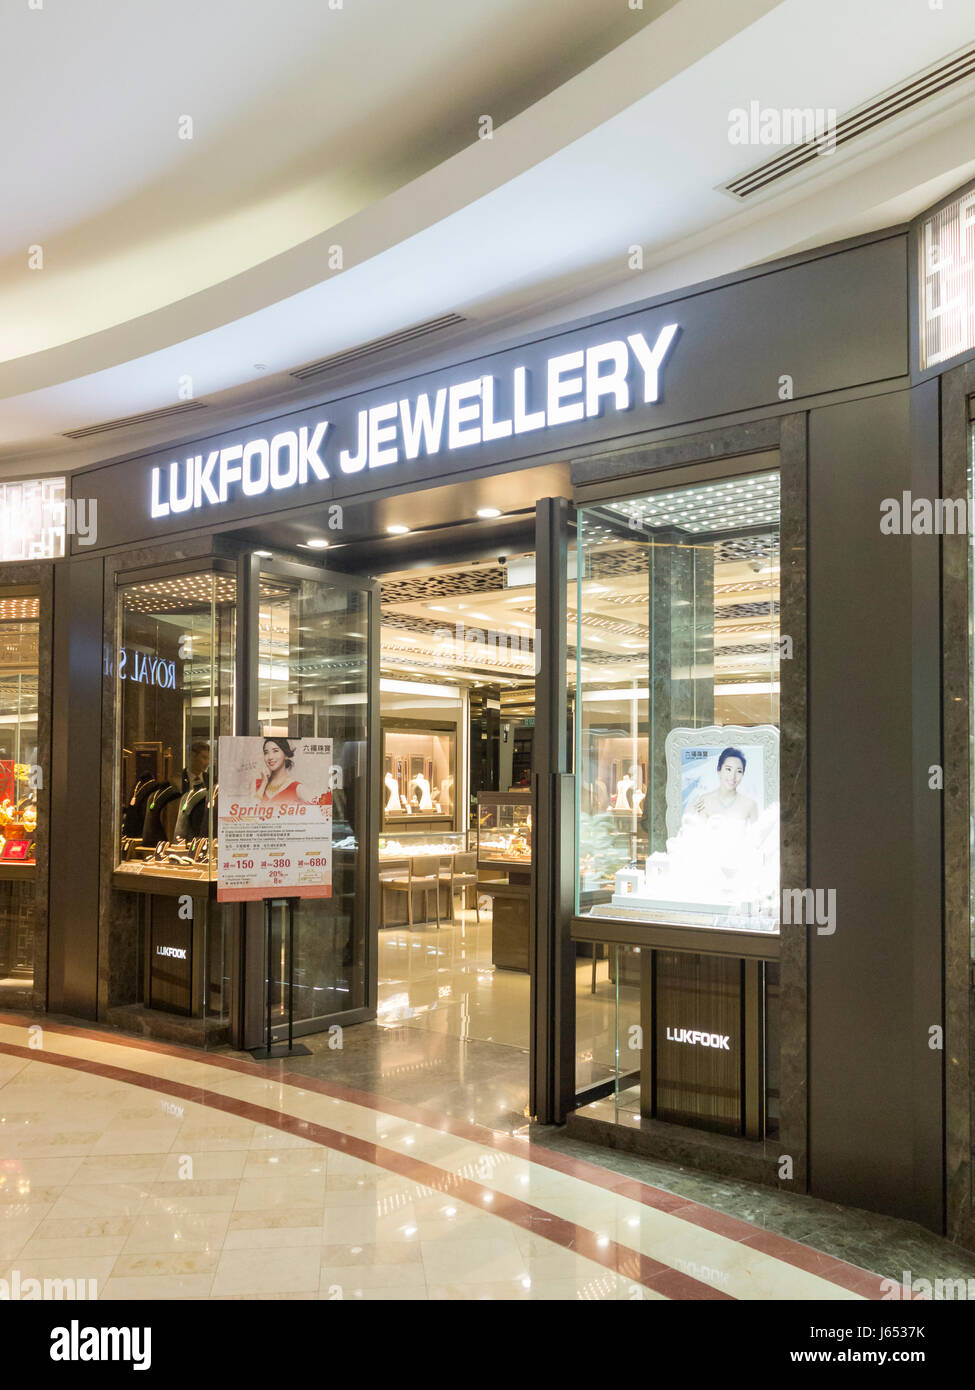 Lukfook jewellery shop, Malaysia Stock Photo - Alamy